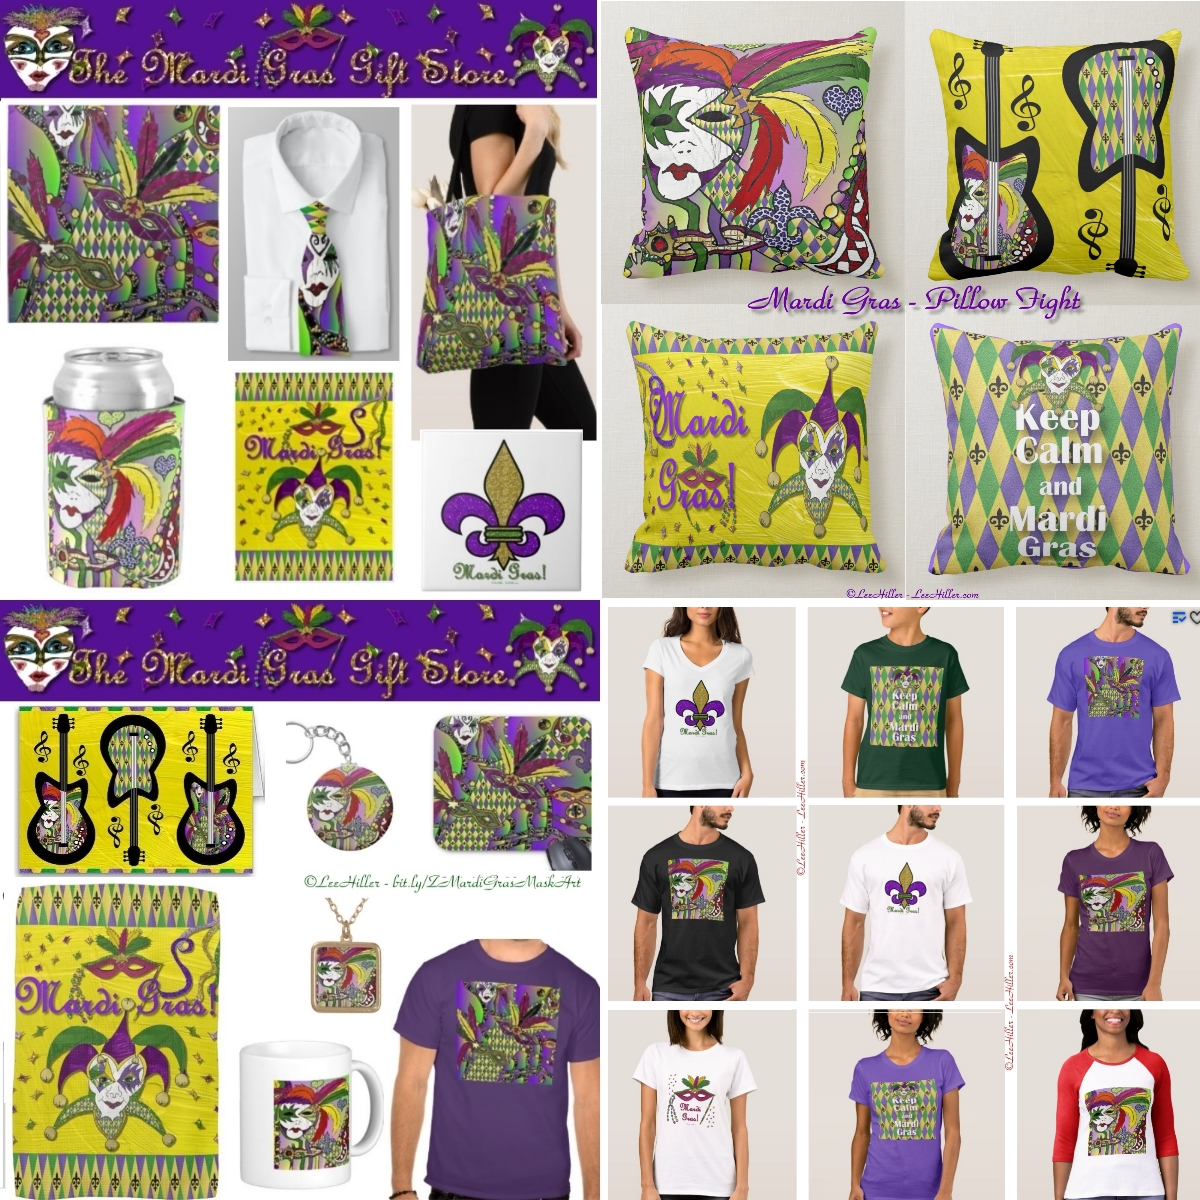 ✨🃏🎭🎉⚜👑⚜🎉🎭🃏✨
Shop Early for #MardiGras #Masks #Jester #harlequin #art #NOLA
  #homedecor #holidaydecor  #giftideas #MardiGras2025 #partysupplies #MardiGrasParty #MardigrasParade #MardiGraCrew

bitly.com/MardiGrasStore